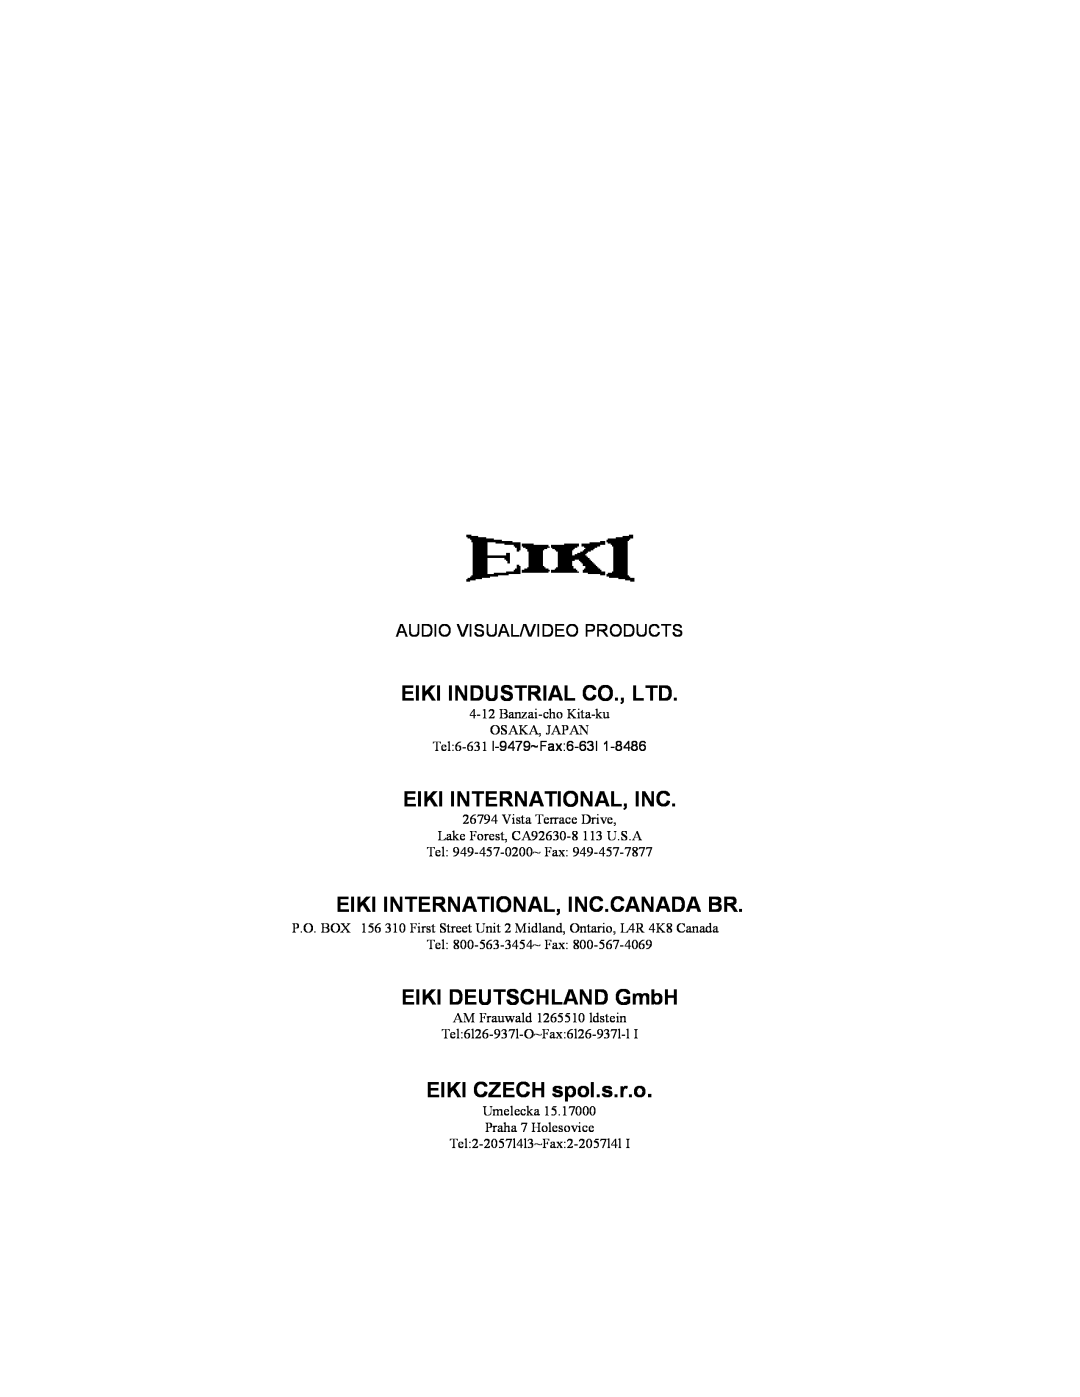 Eiki V-2500 instruction manual Eiki International, Inc.Canada Br, EIKI DEUTSCHLAND GmbH, EIKI CZECH spol.s.r.o 